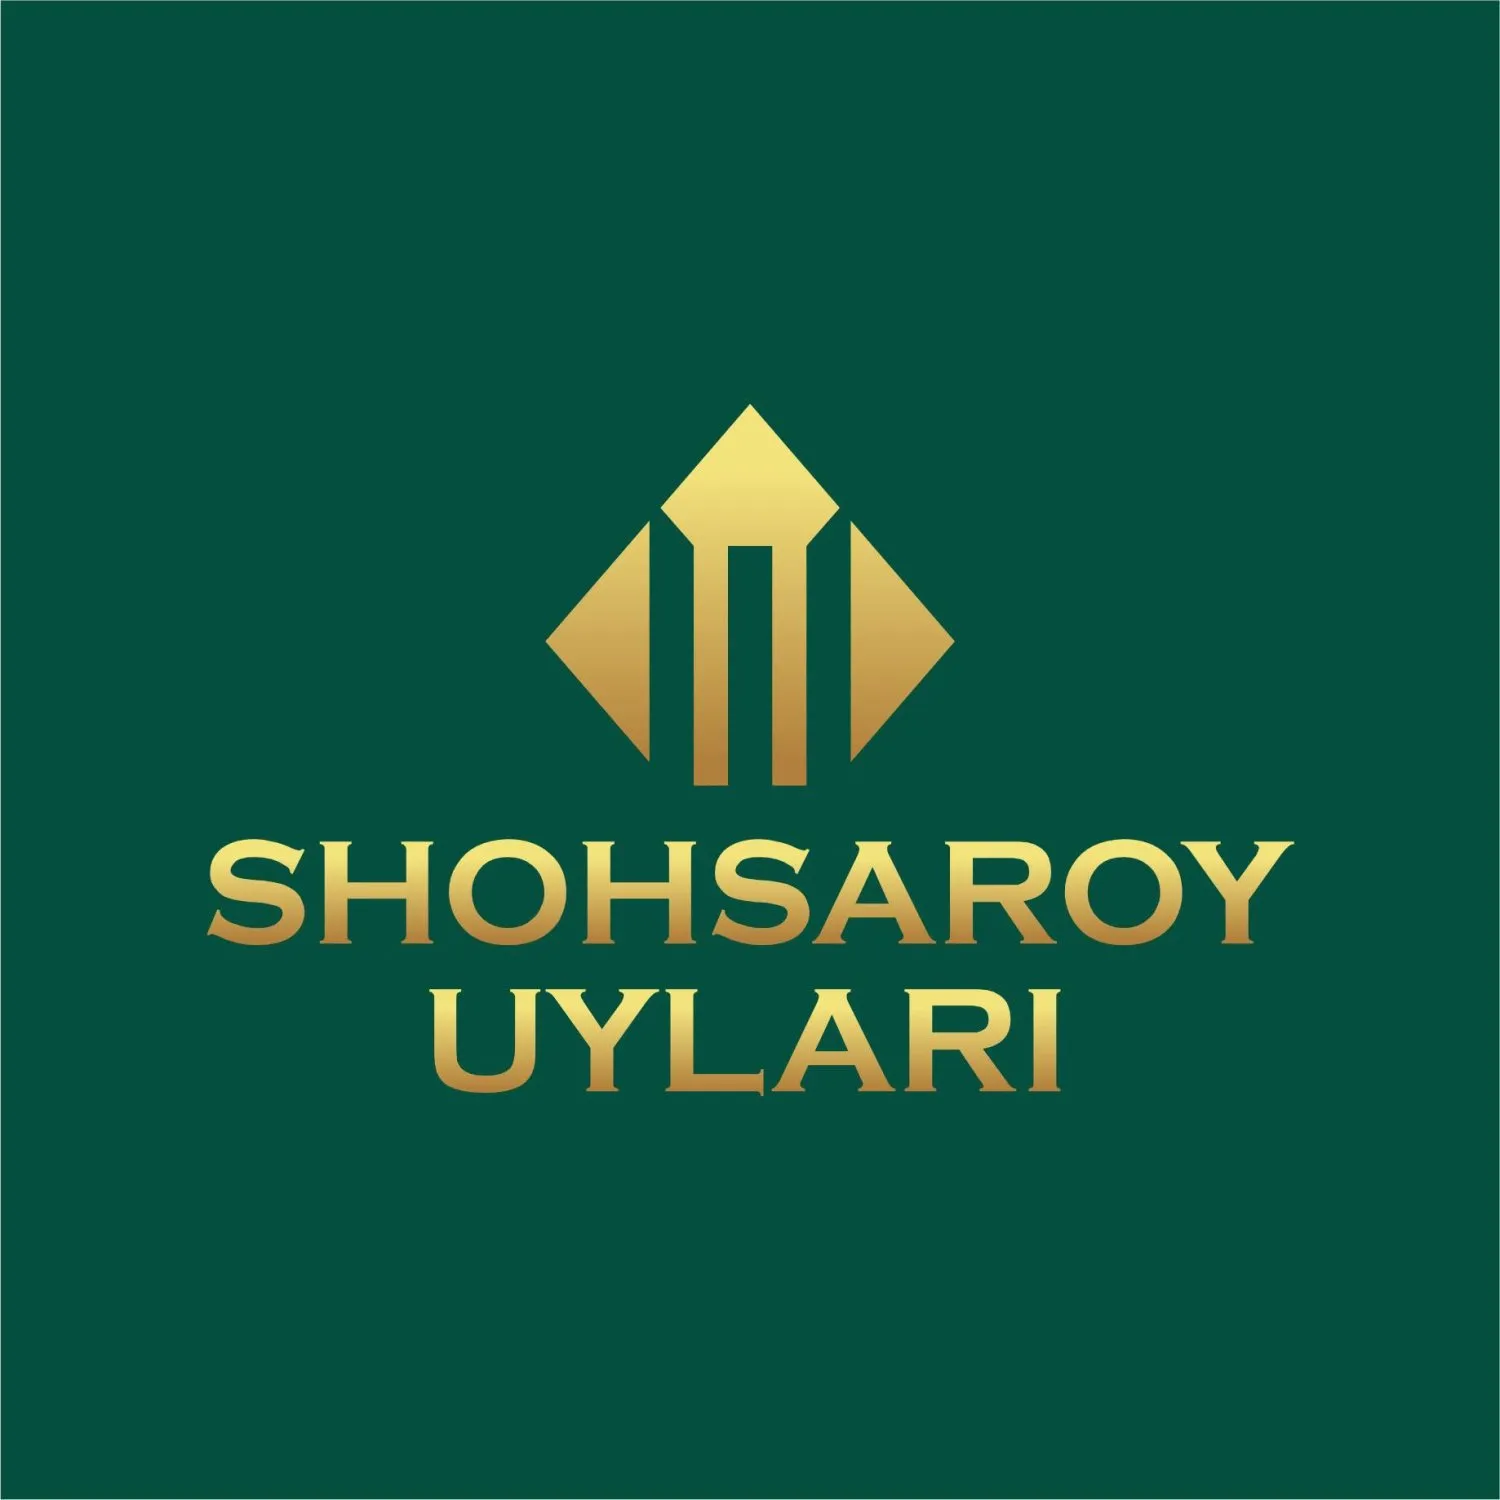 Shohsaroy uylari